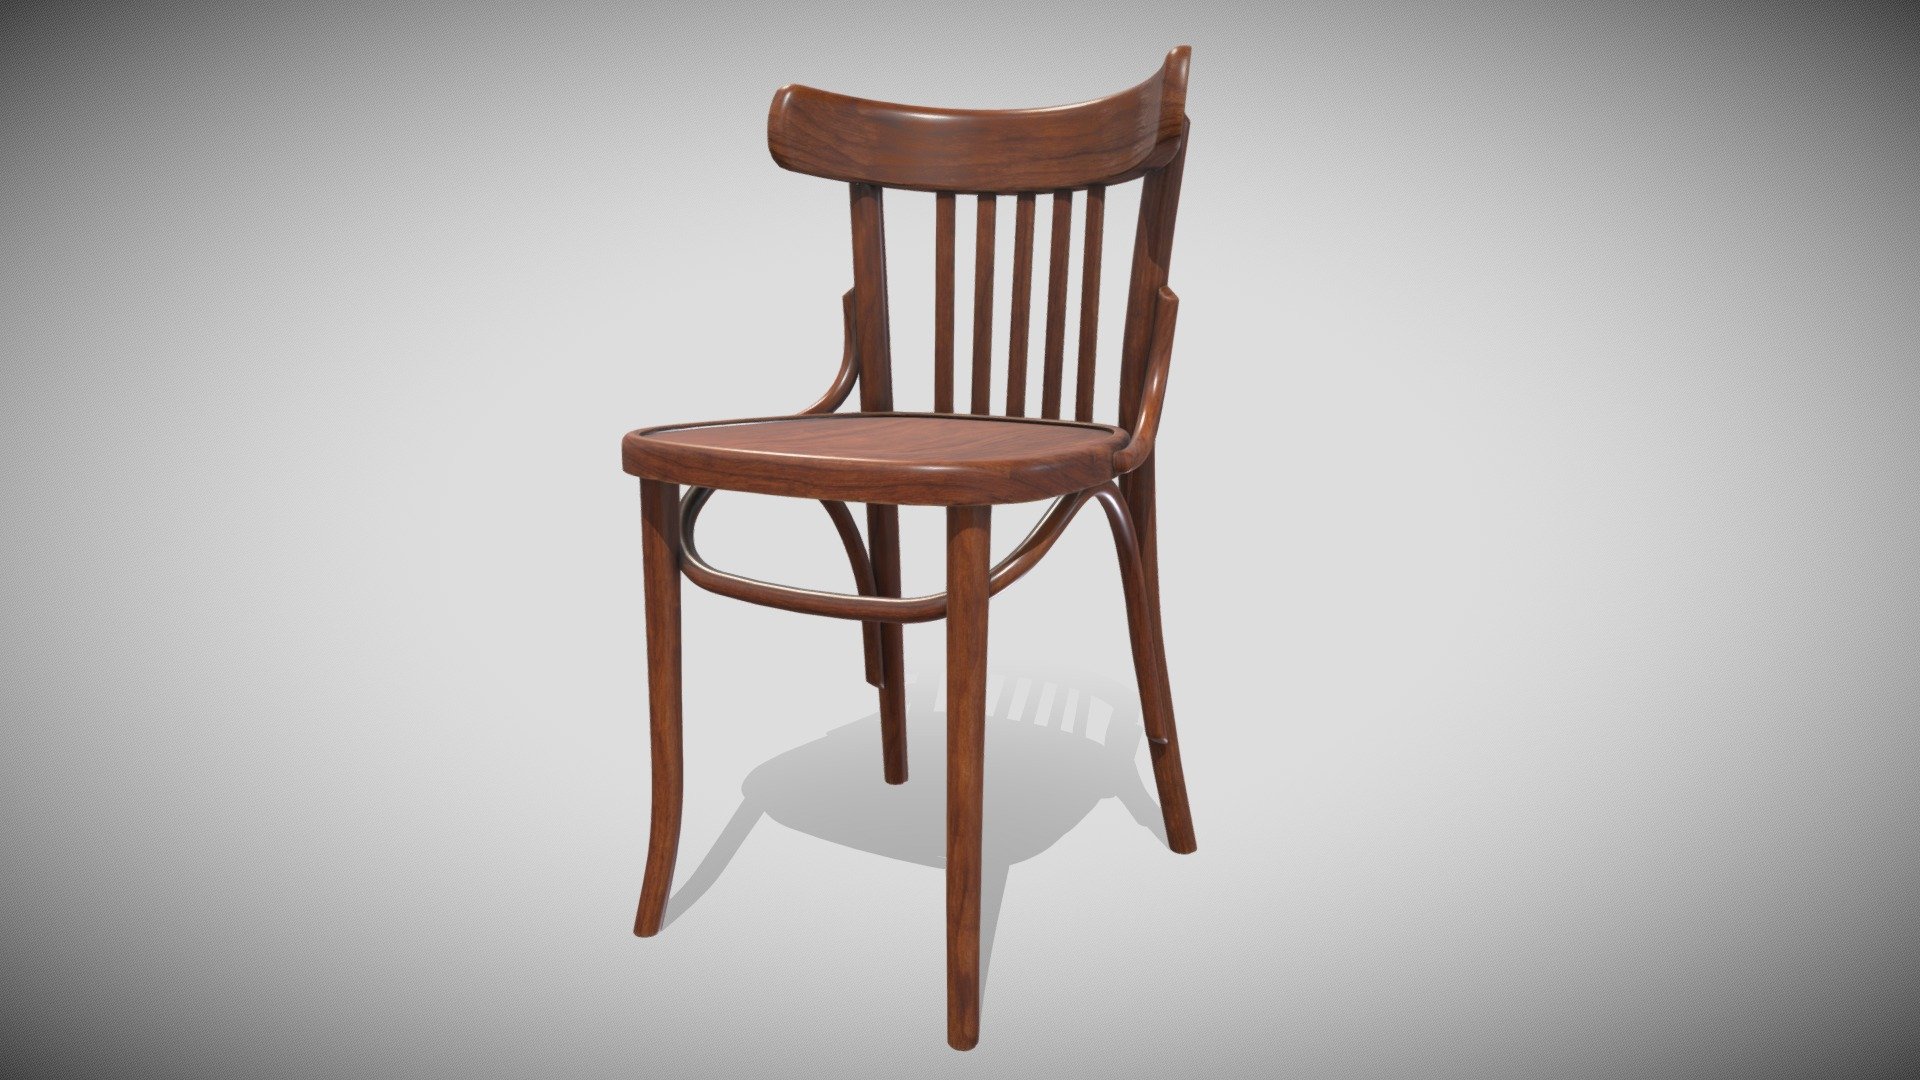 Classic Chair Download Free 3d Model By Francesco Coldesina Topfrank2013 [b62c84d] Sketchfab